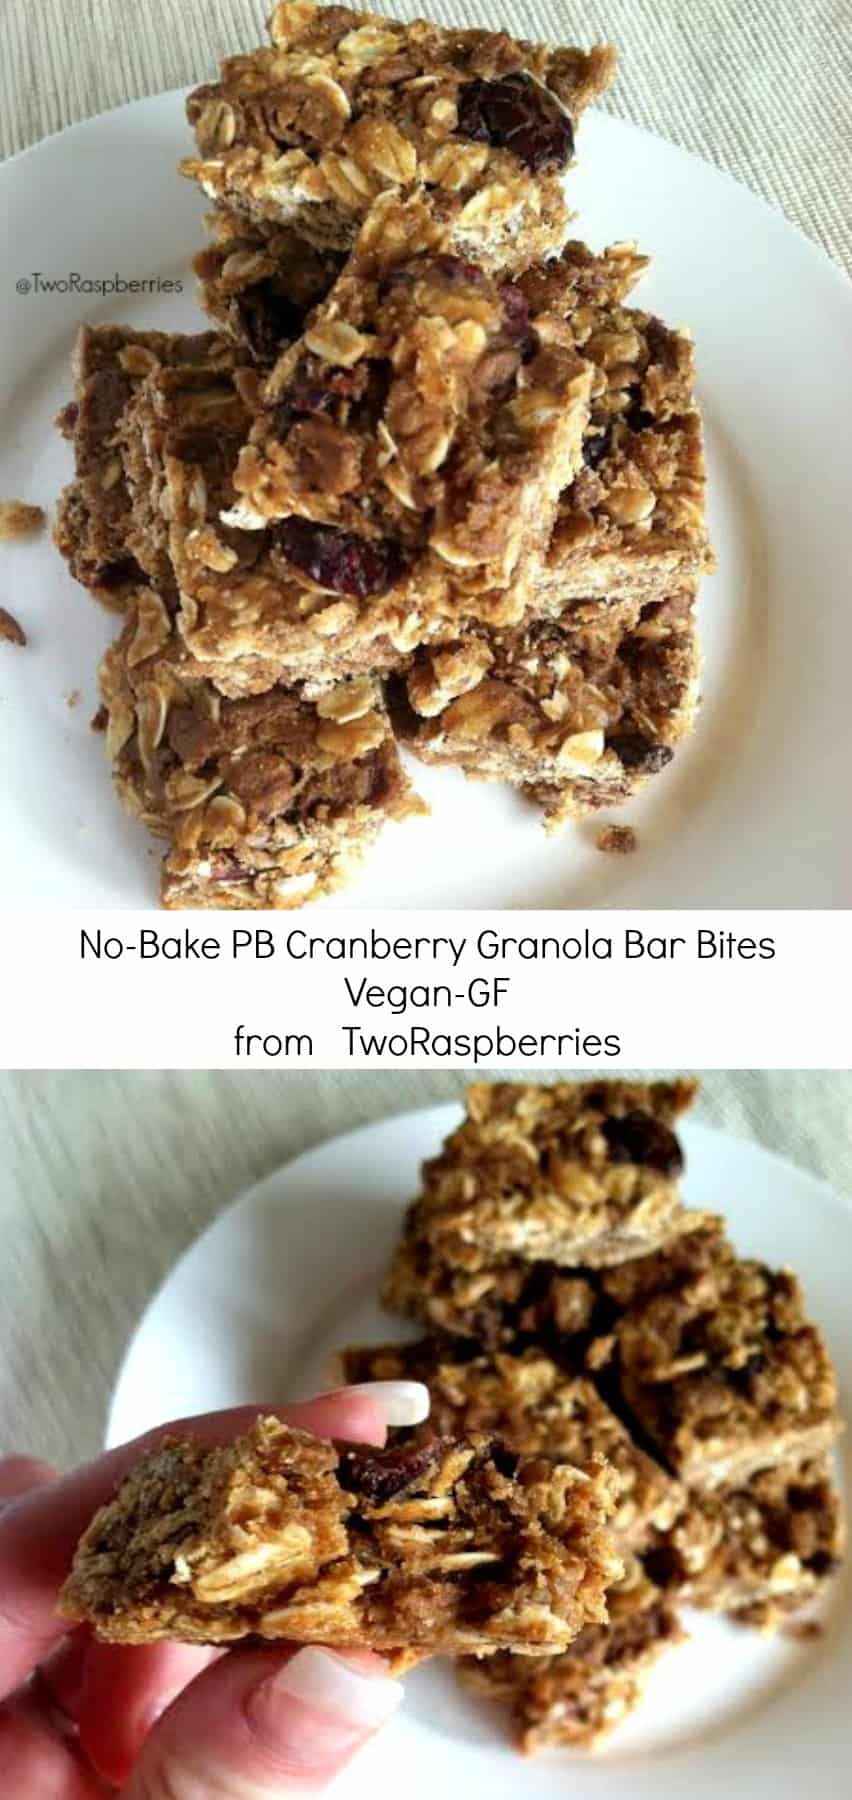 No-Bake PB Cranberry Granola Bar Bites